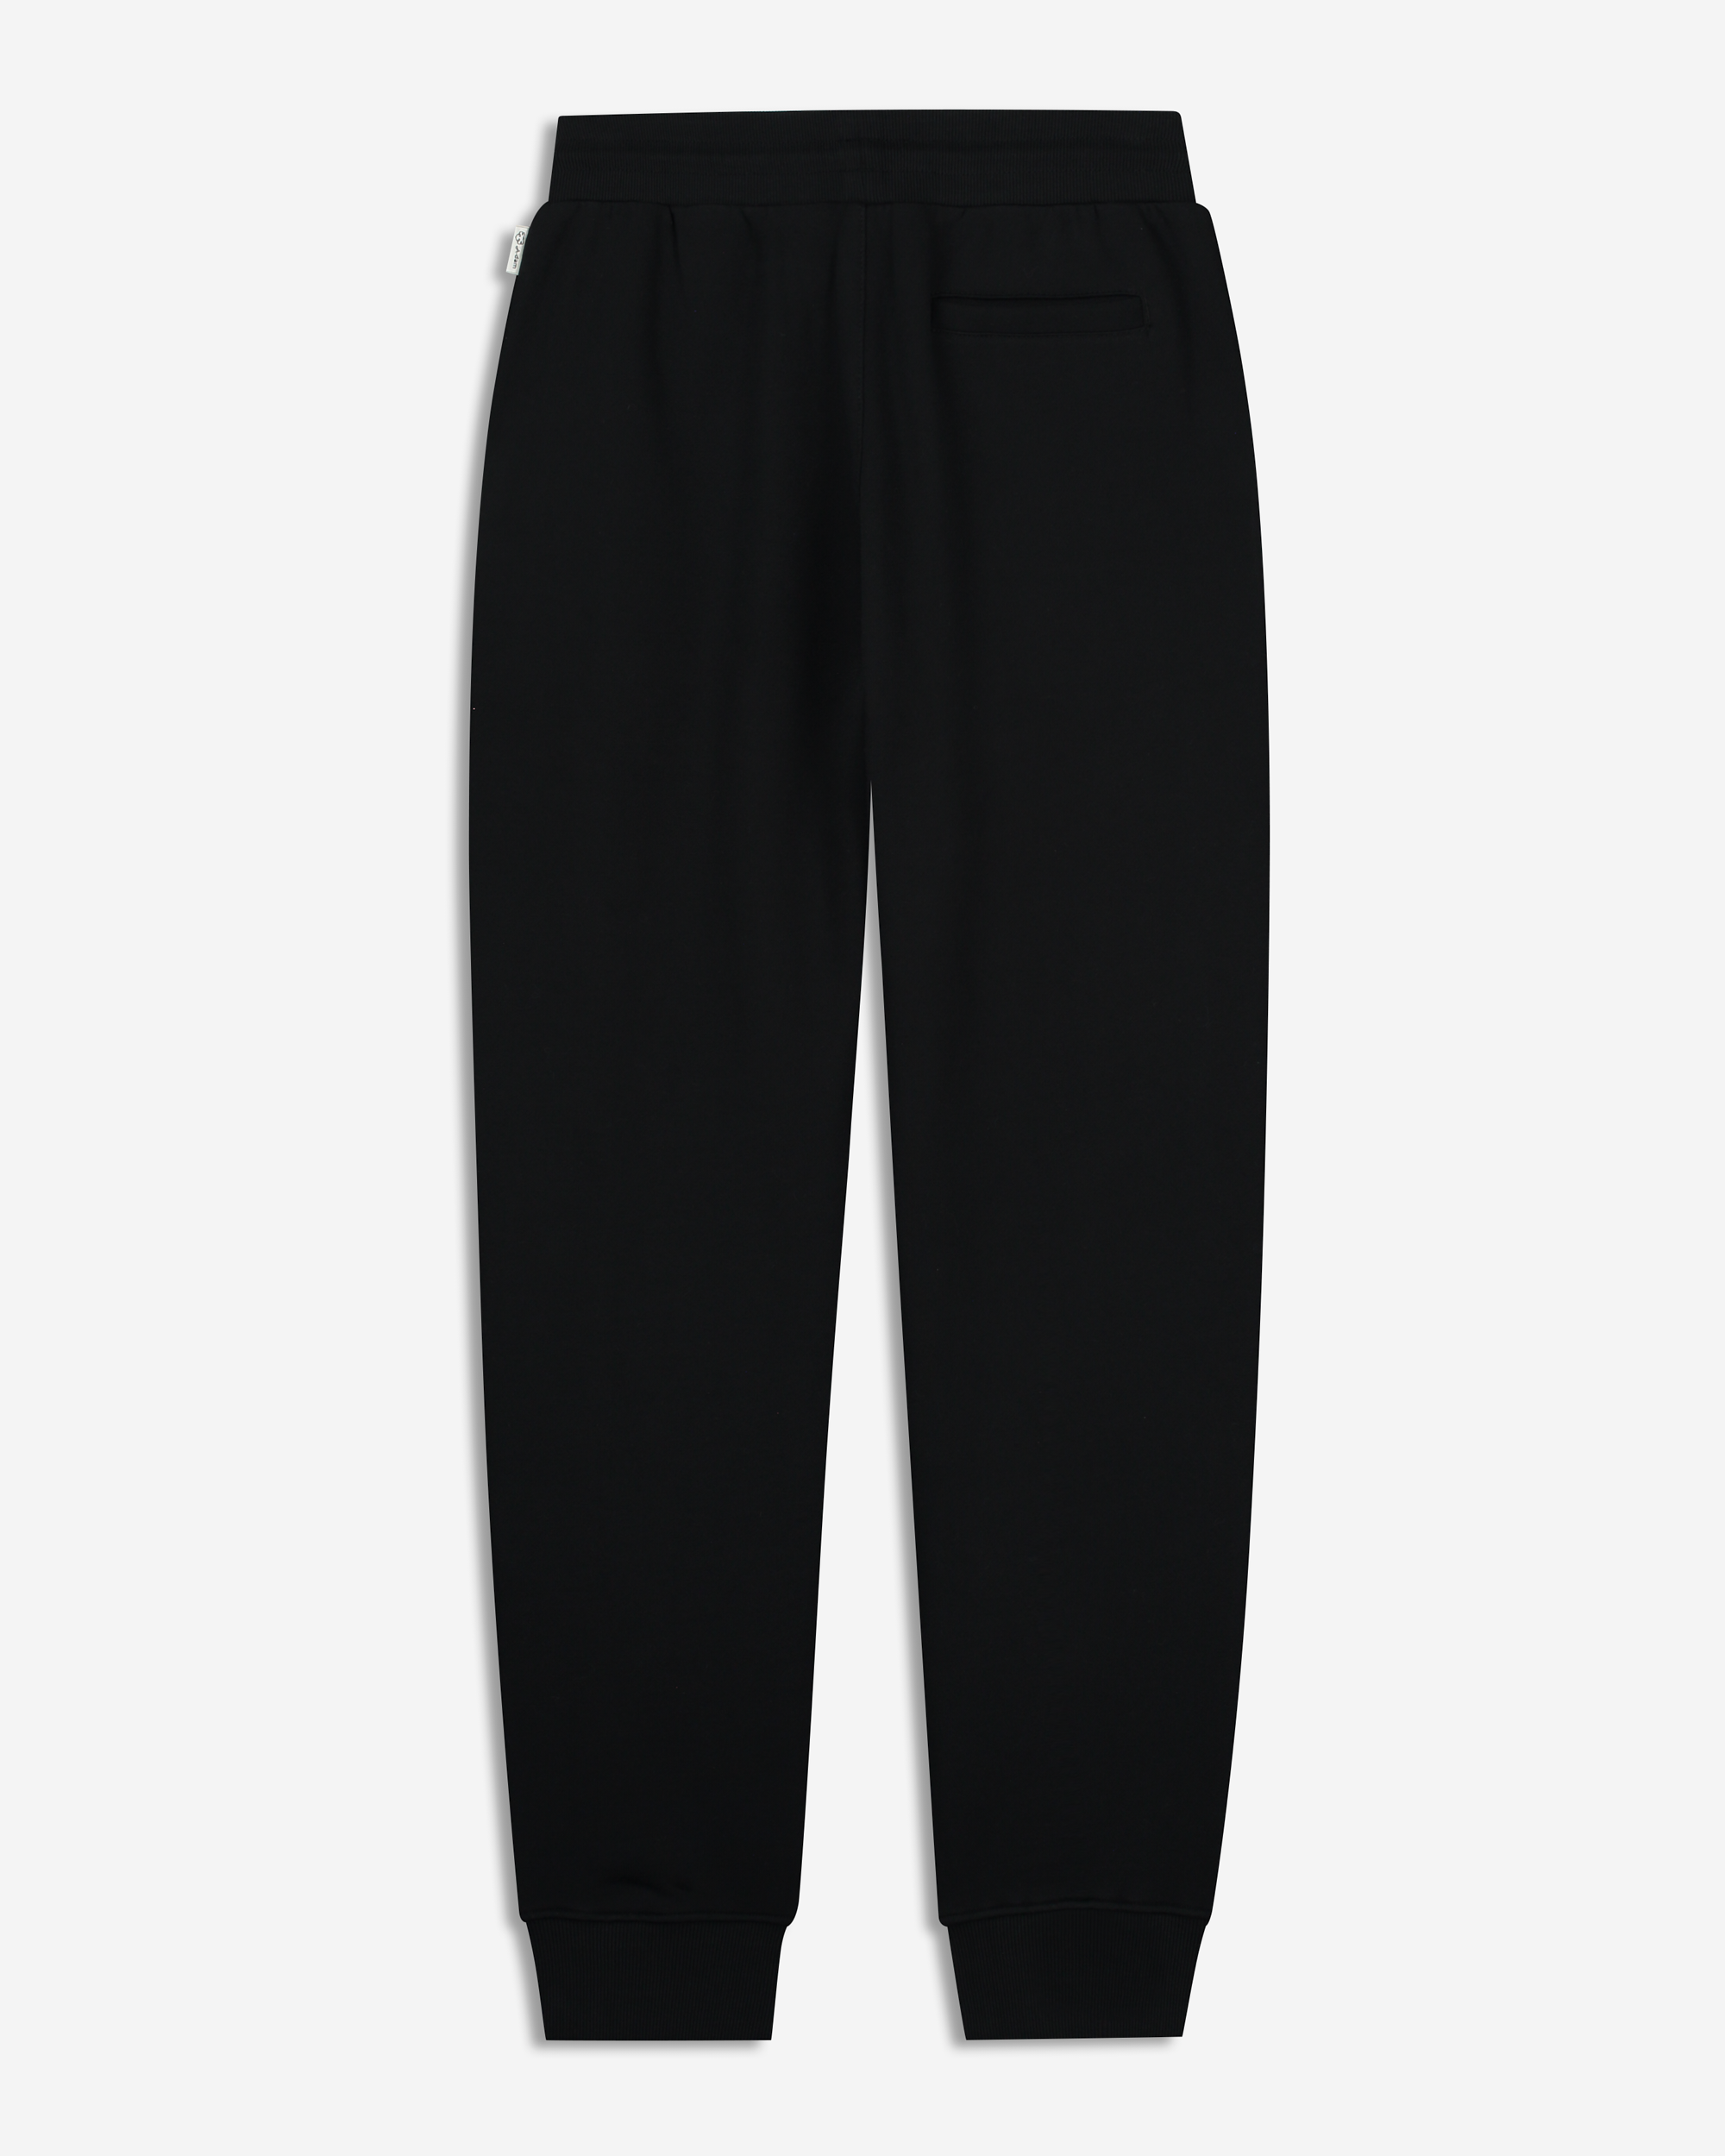 A-dam's black organic cotton sweatpants with dream icon for men